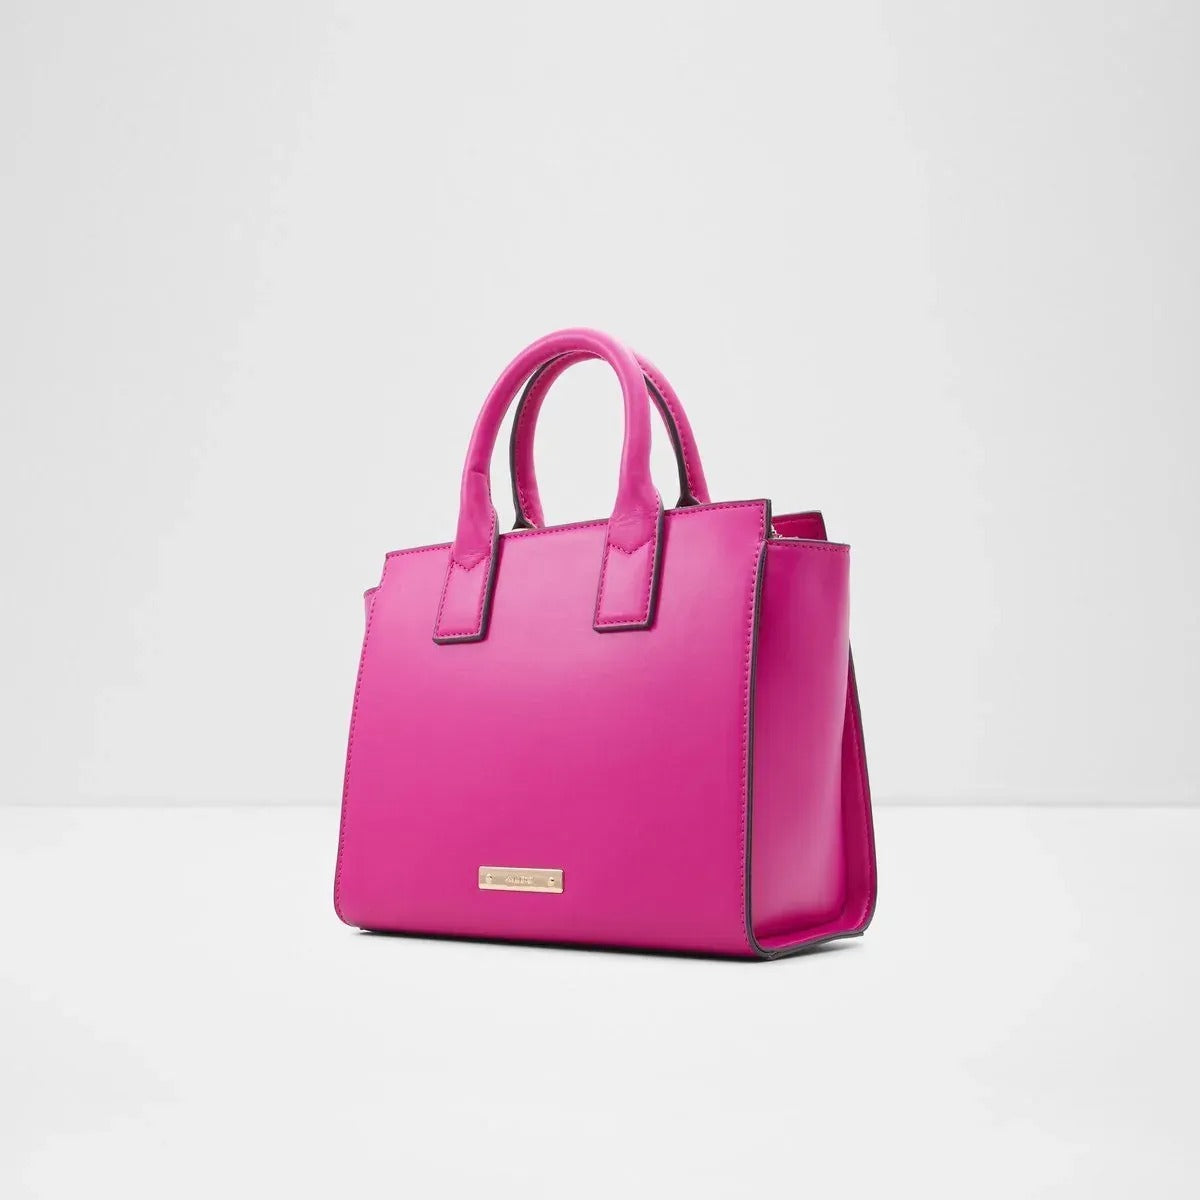 Aldo WYLALAERIA Women's Handbag- Dark Pink